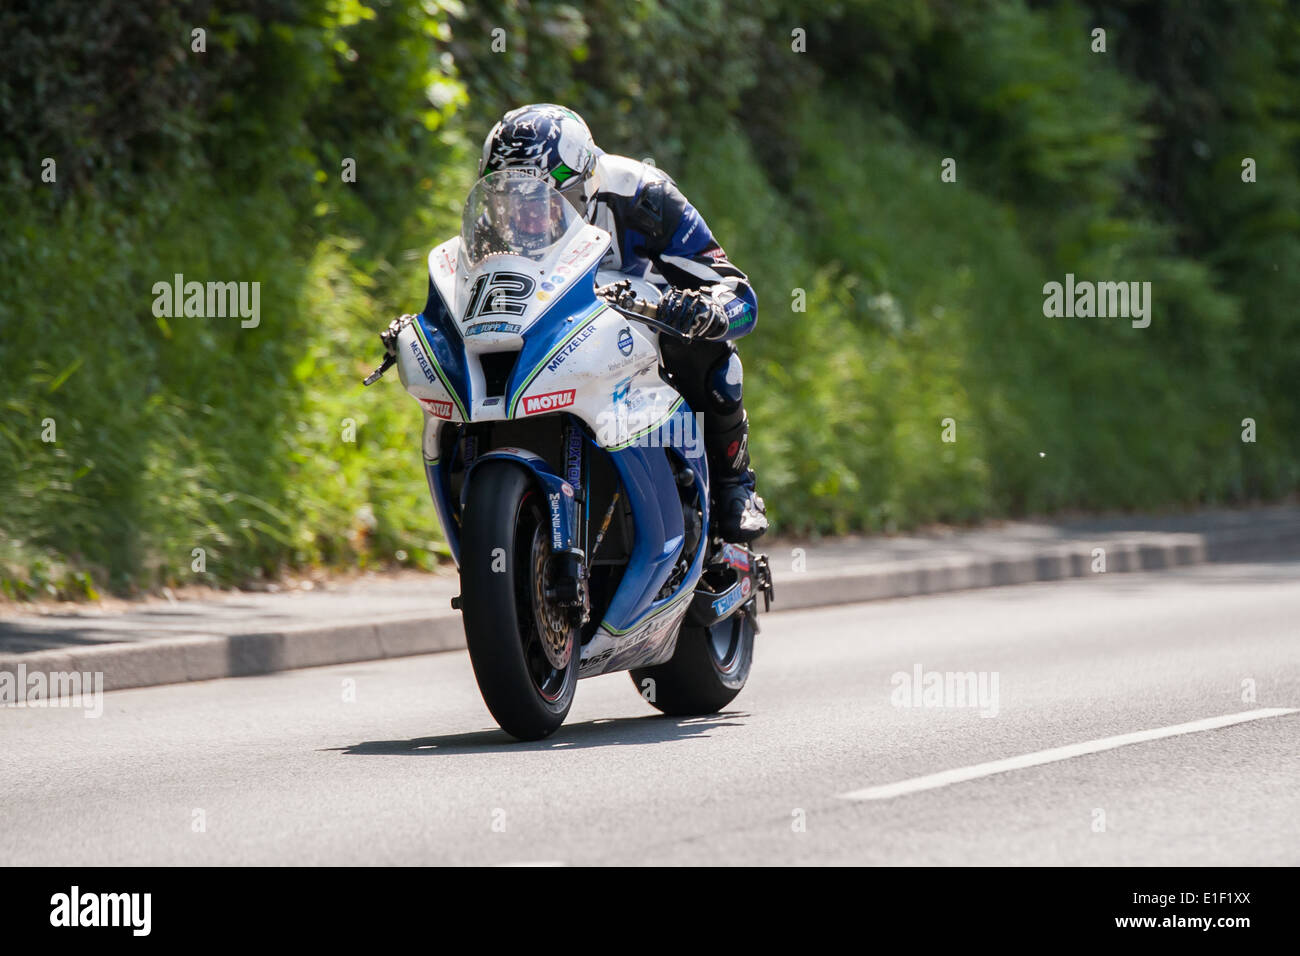 Dean Harrison on the RC Express Kawasaki during the 2014 Isle of Man TT Superbike race, 31/05/14. Stock Photo